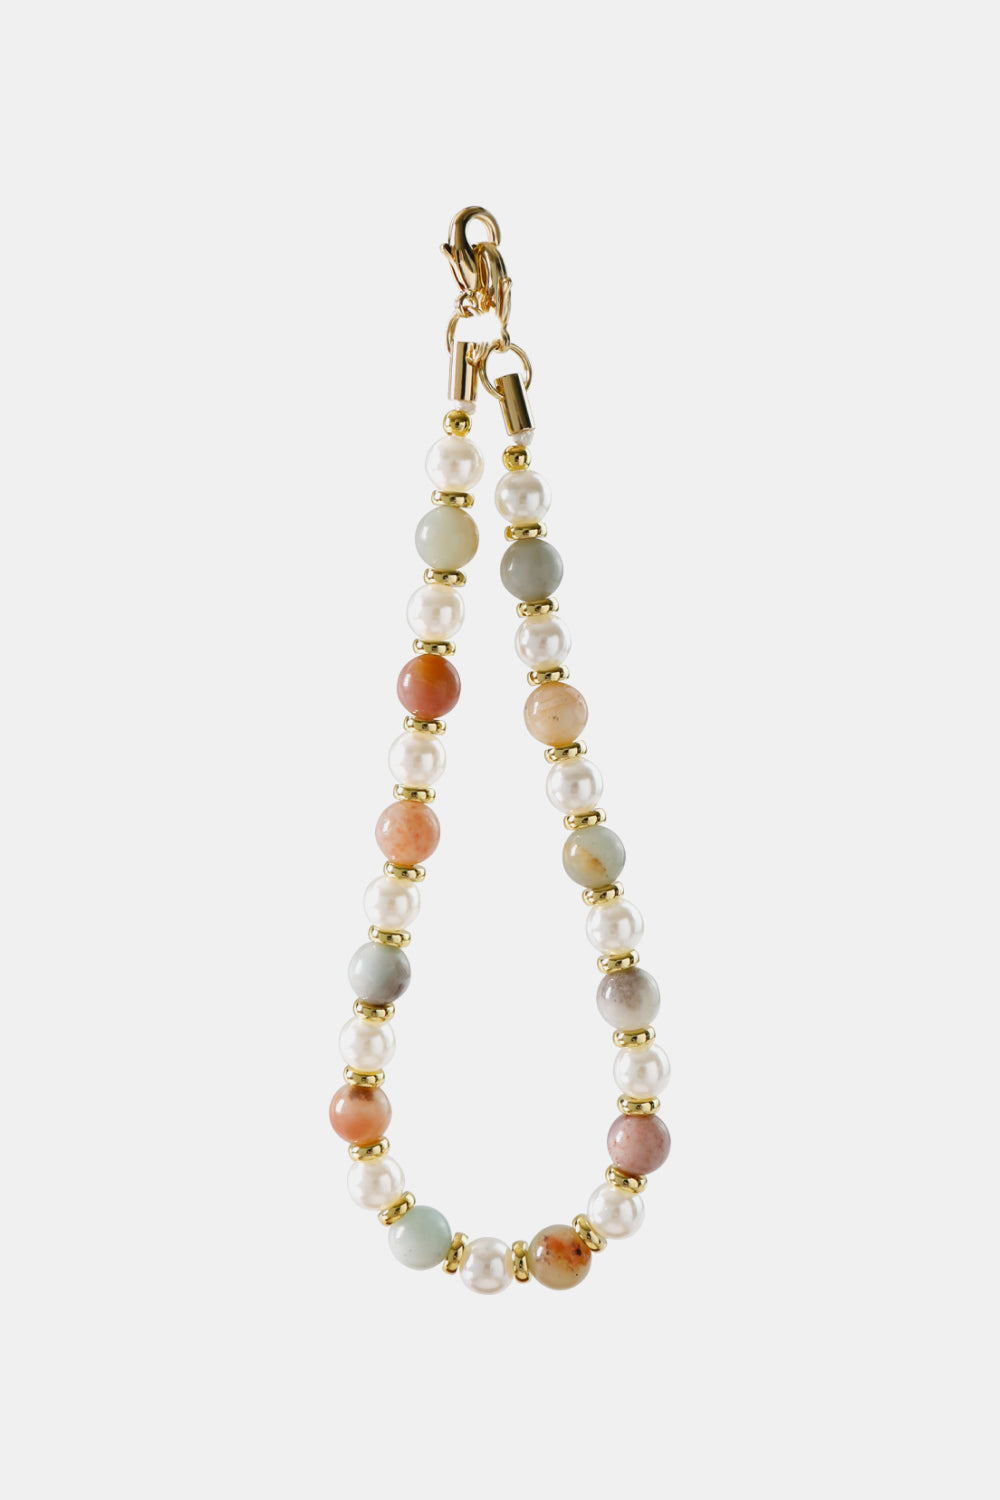 Natural Stone Beads Key Chain